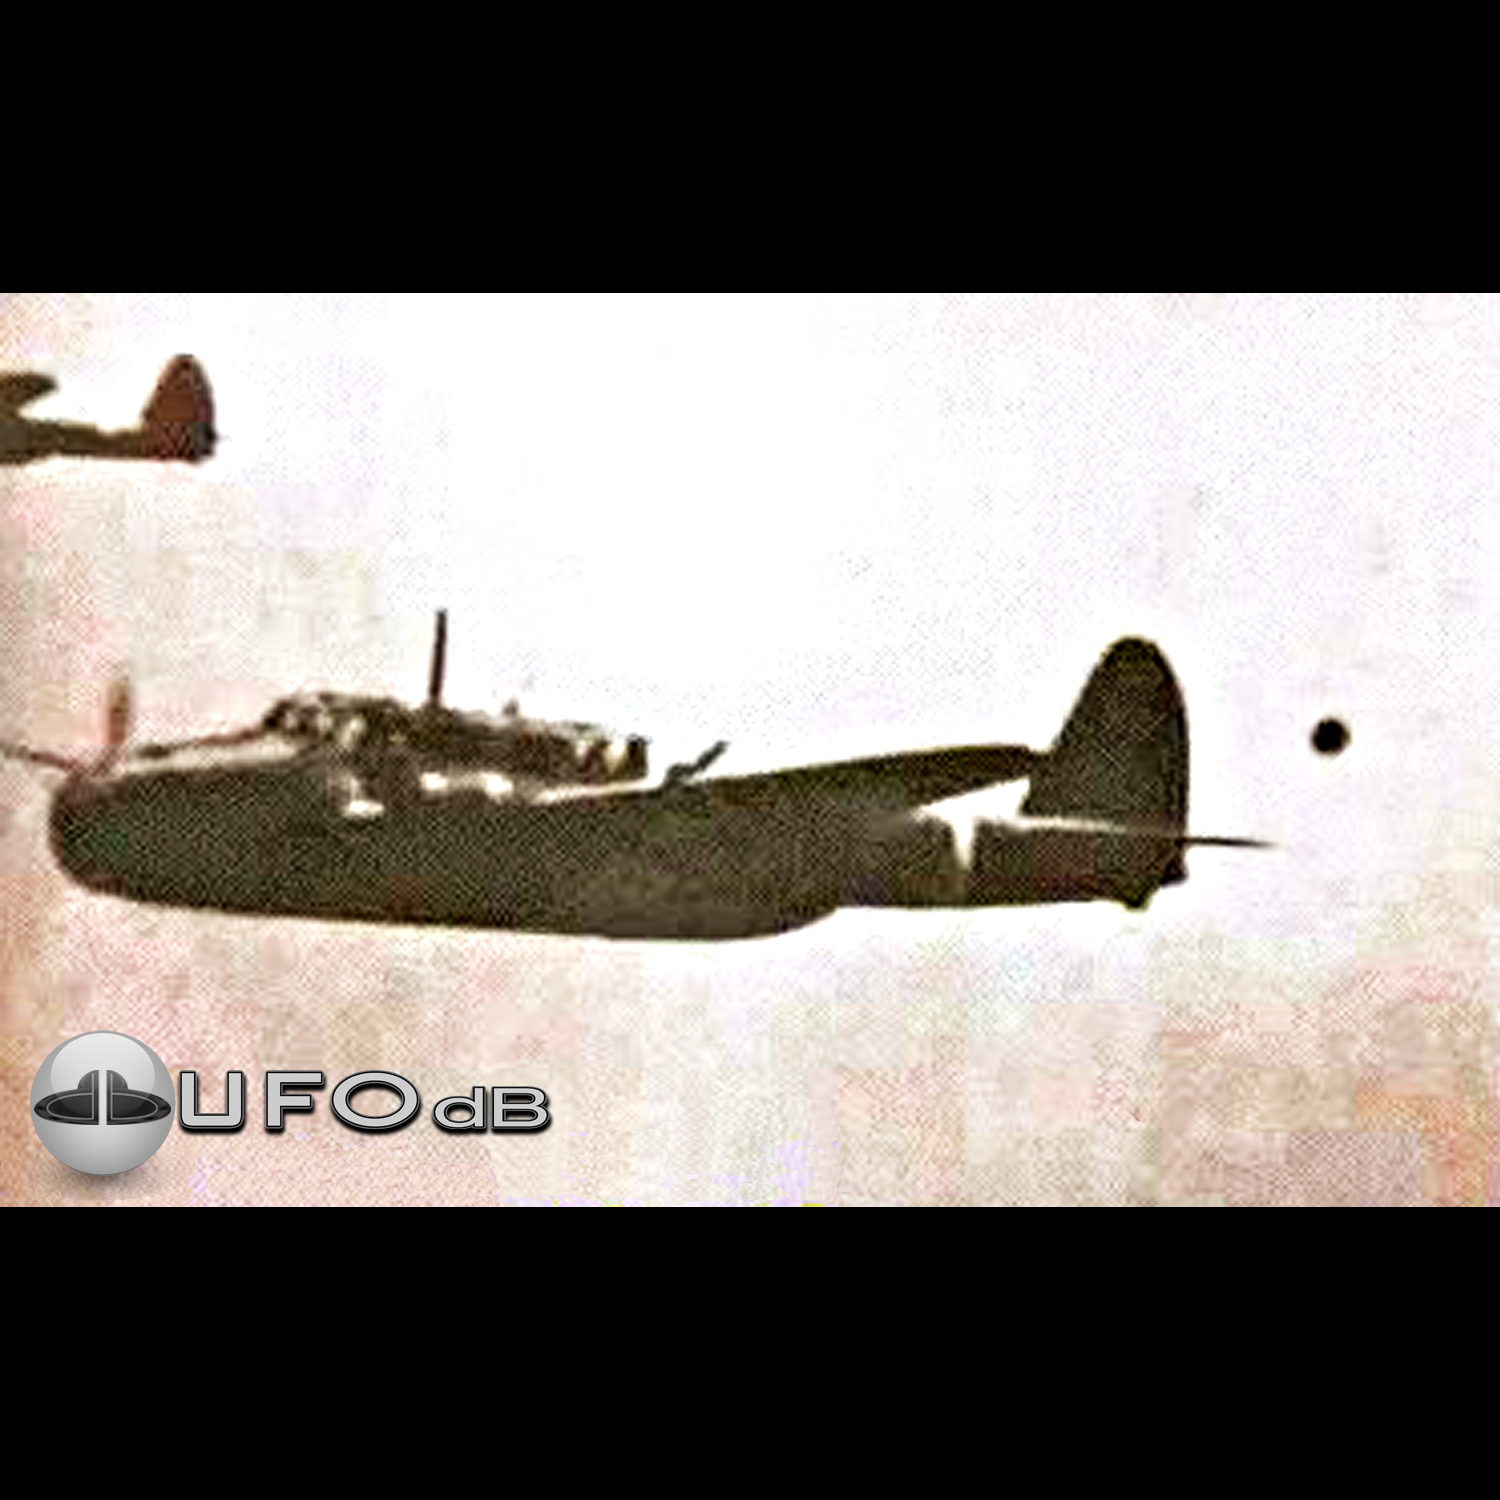 World War II Japanese Sally Bomber followed by UFO (Foo Fighters) UFO Picture #209-1